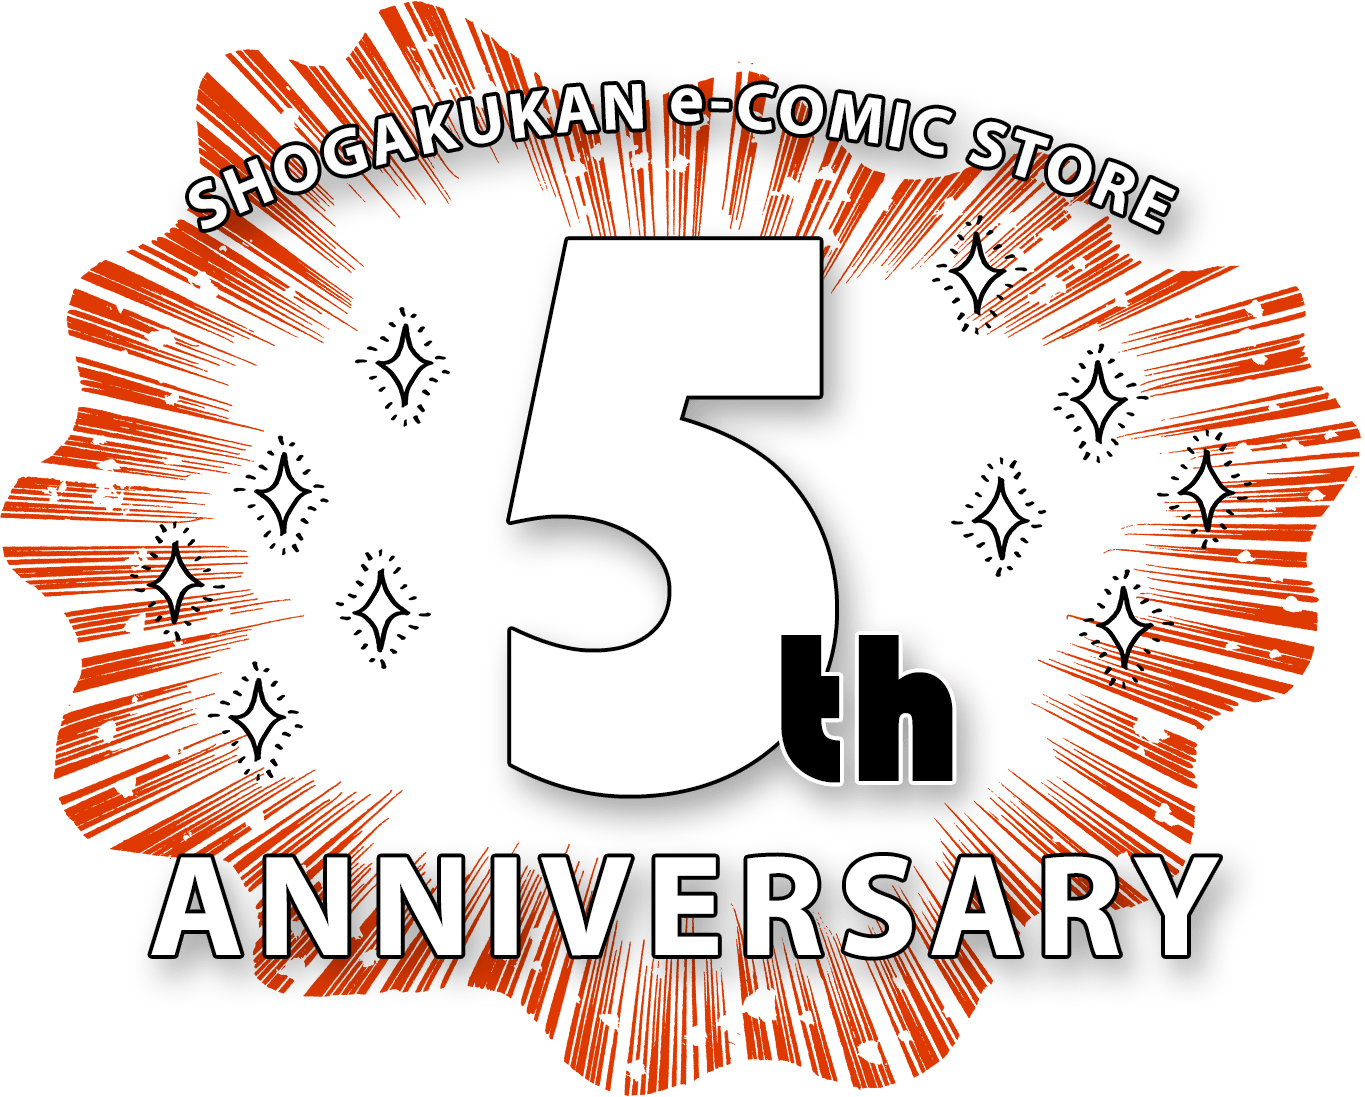 Shogakukan e-comic store 5th anniversary